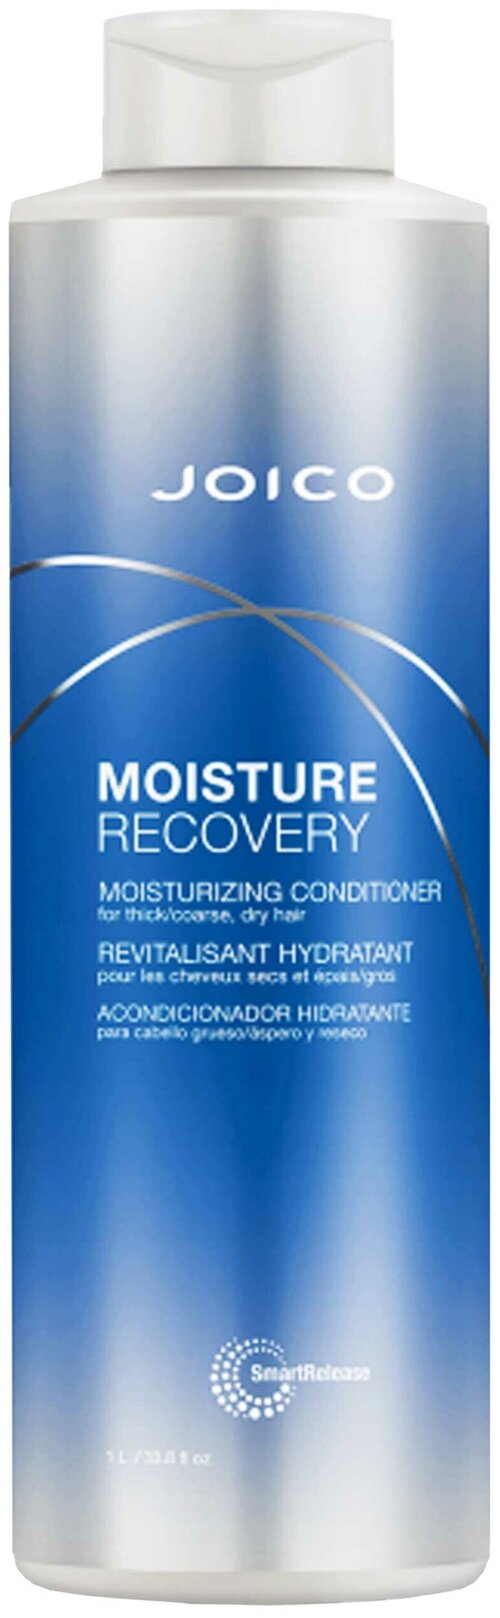 Joico кондиционер Moisture Recovery Revitalisant Hydratant увлажняющий для плотных/жестких сухих волос, 1000 мл